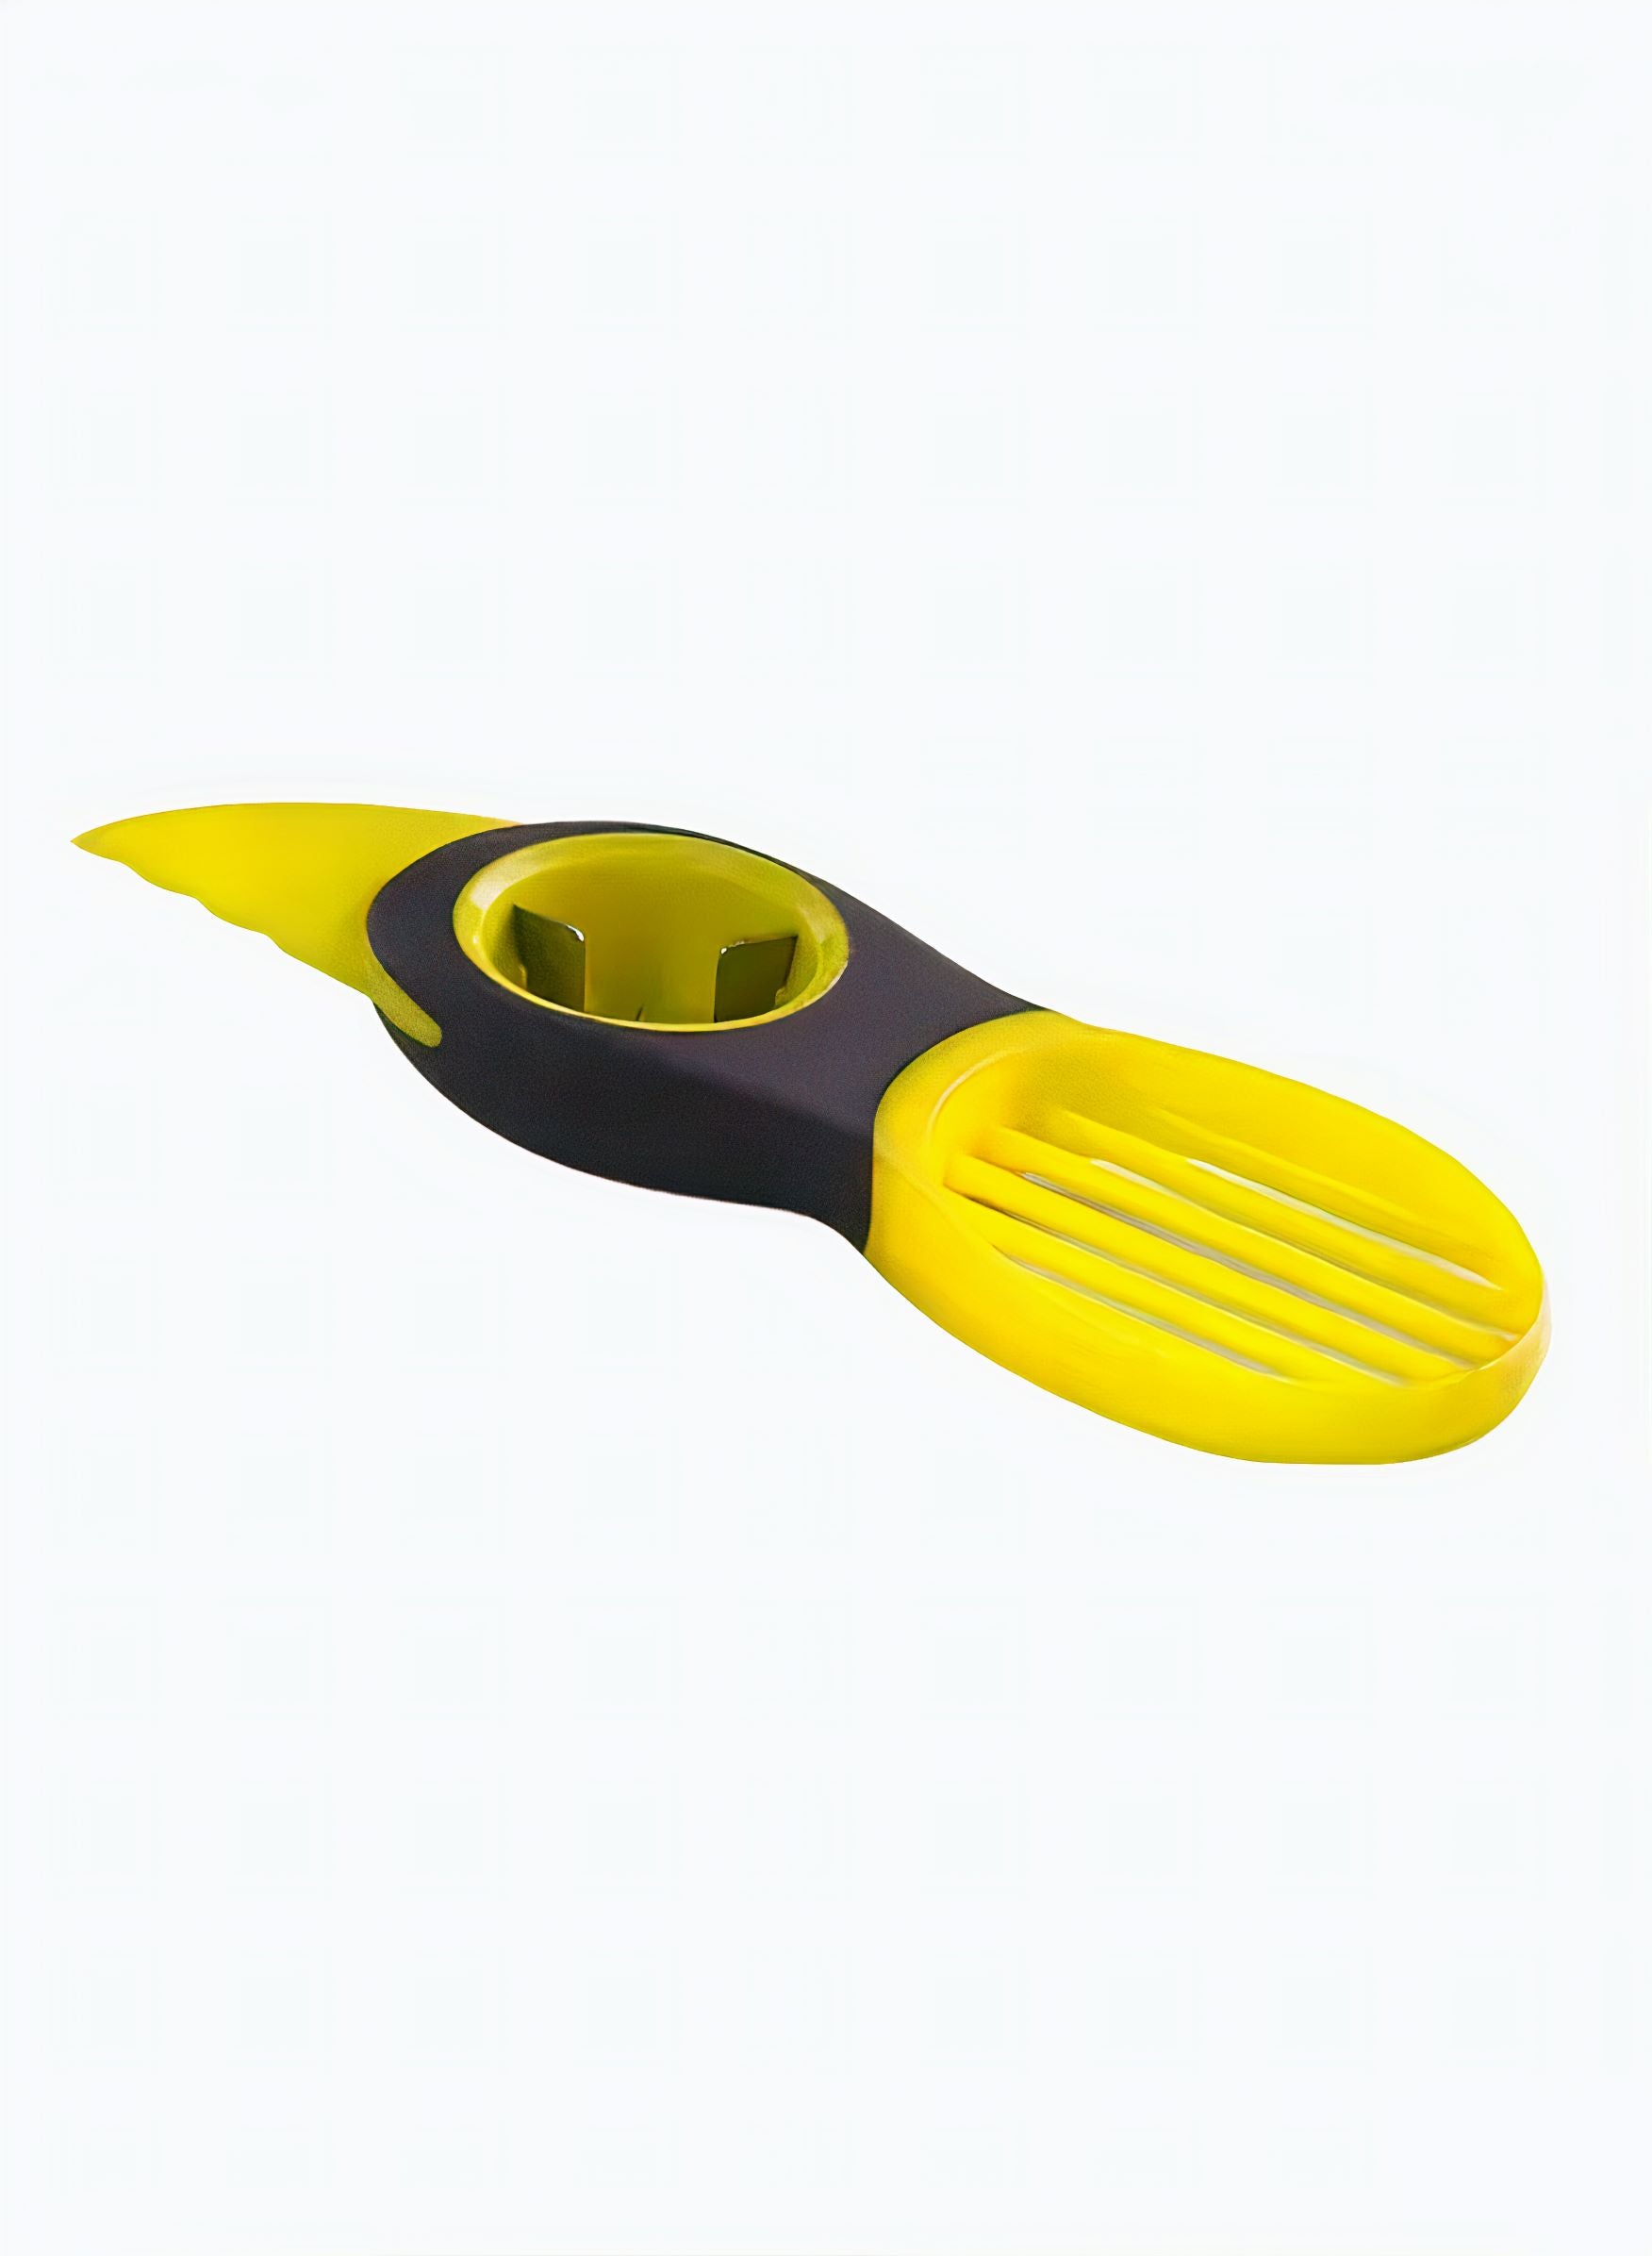 Silicon Avocado Slicer Yellow/Black